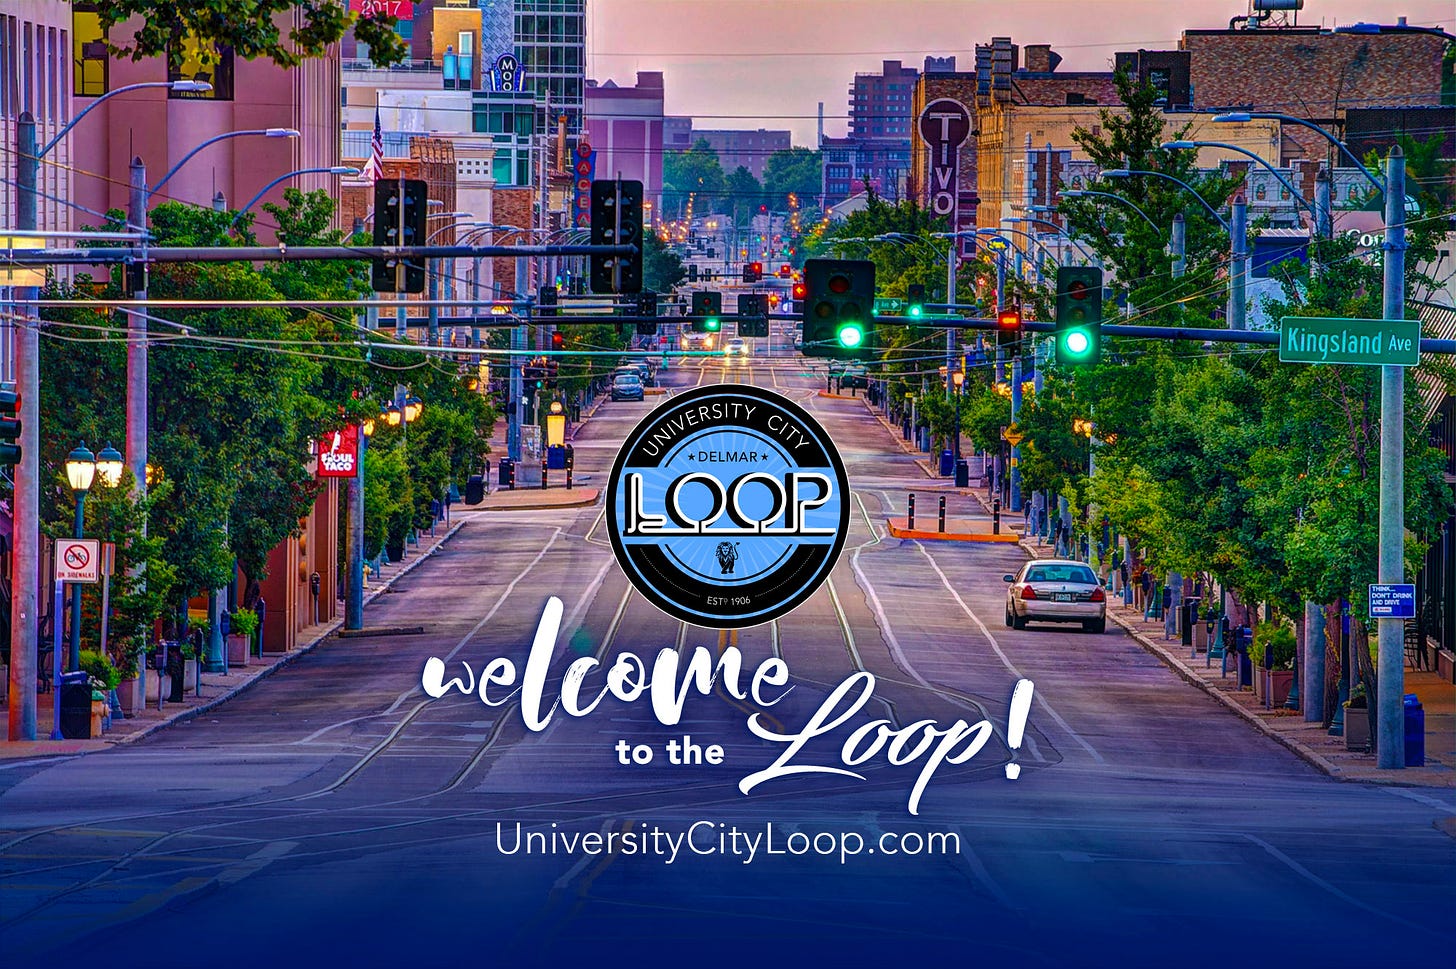 University City Loop